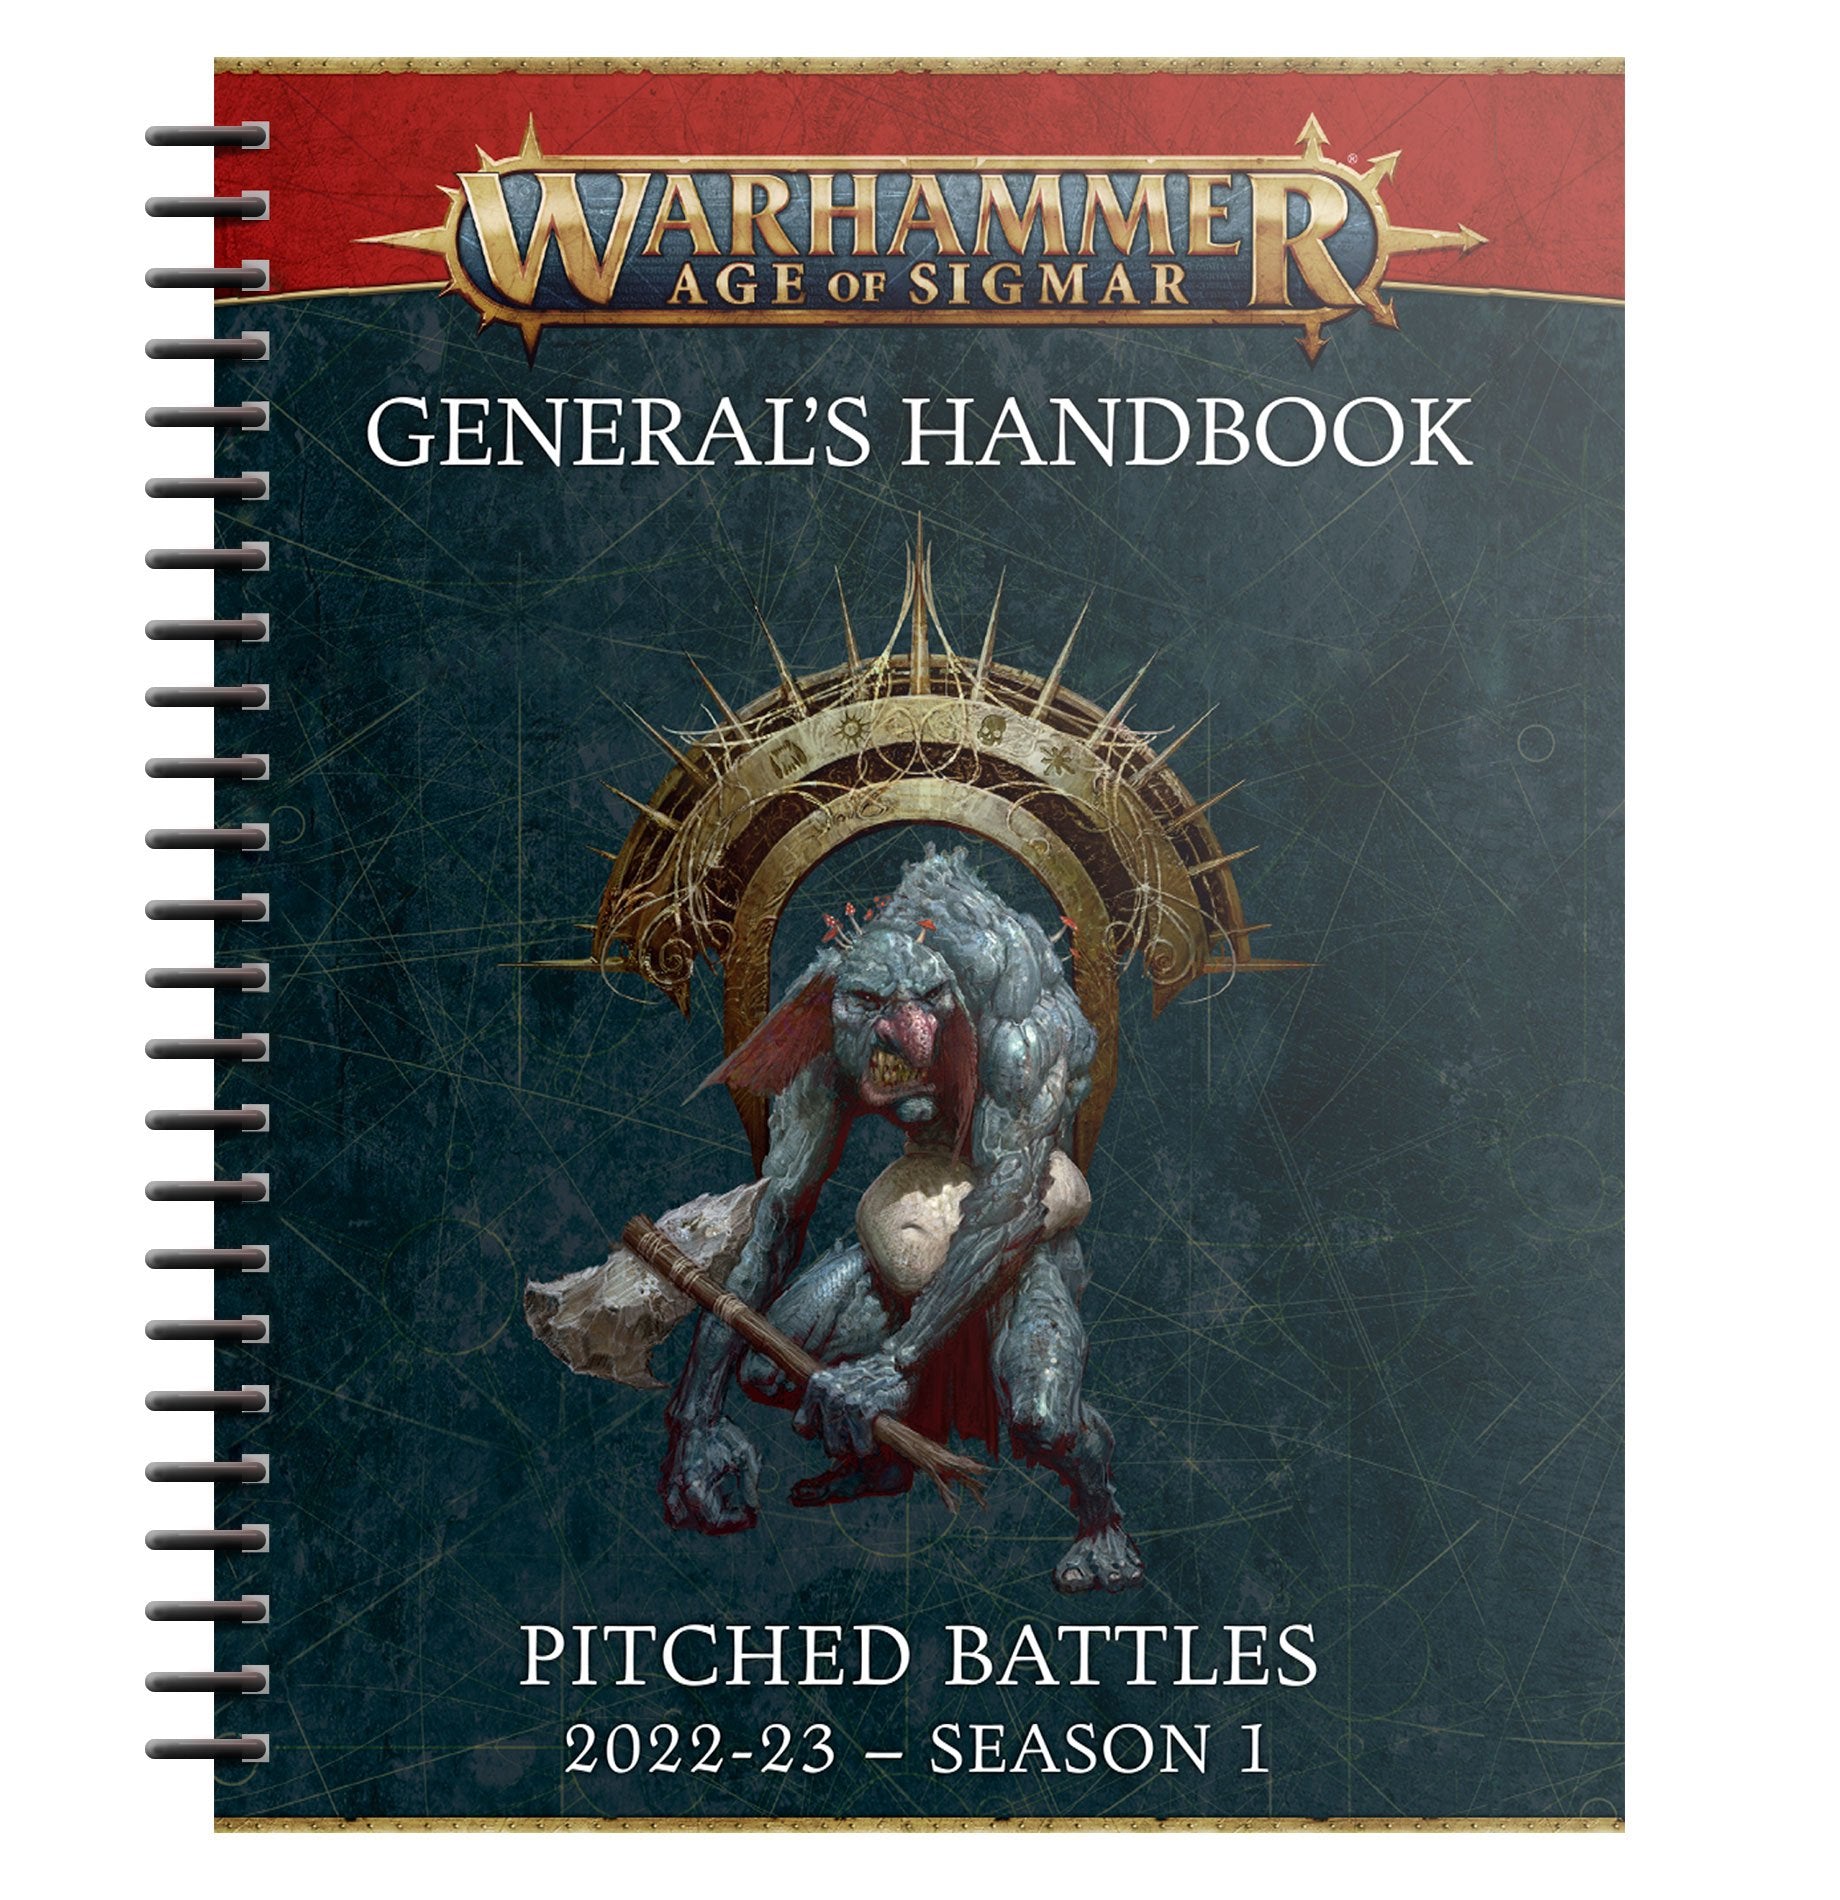 Warhammer Age of Sigmar: General's Handbook: Pitched Battles 2022-23 Season 1